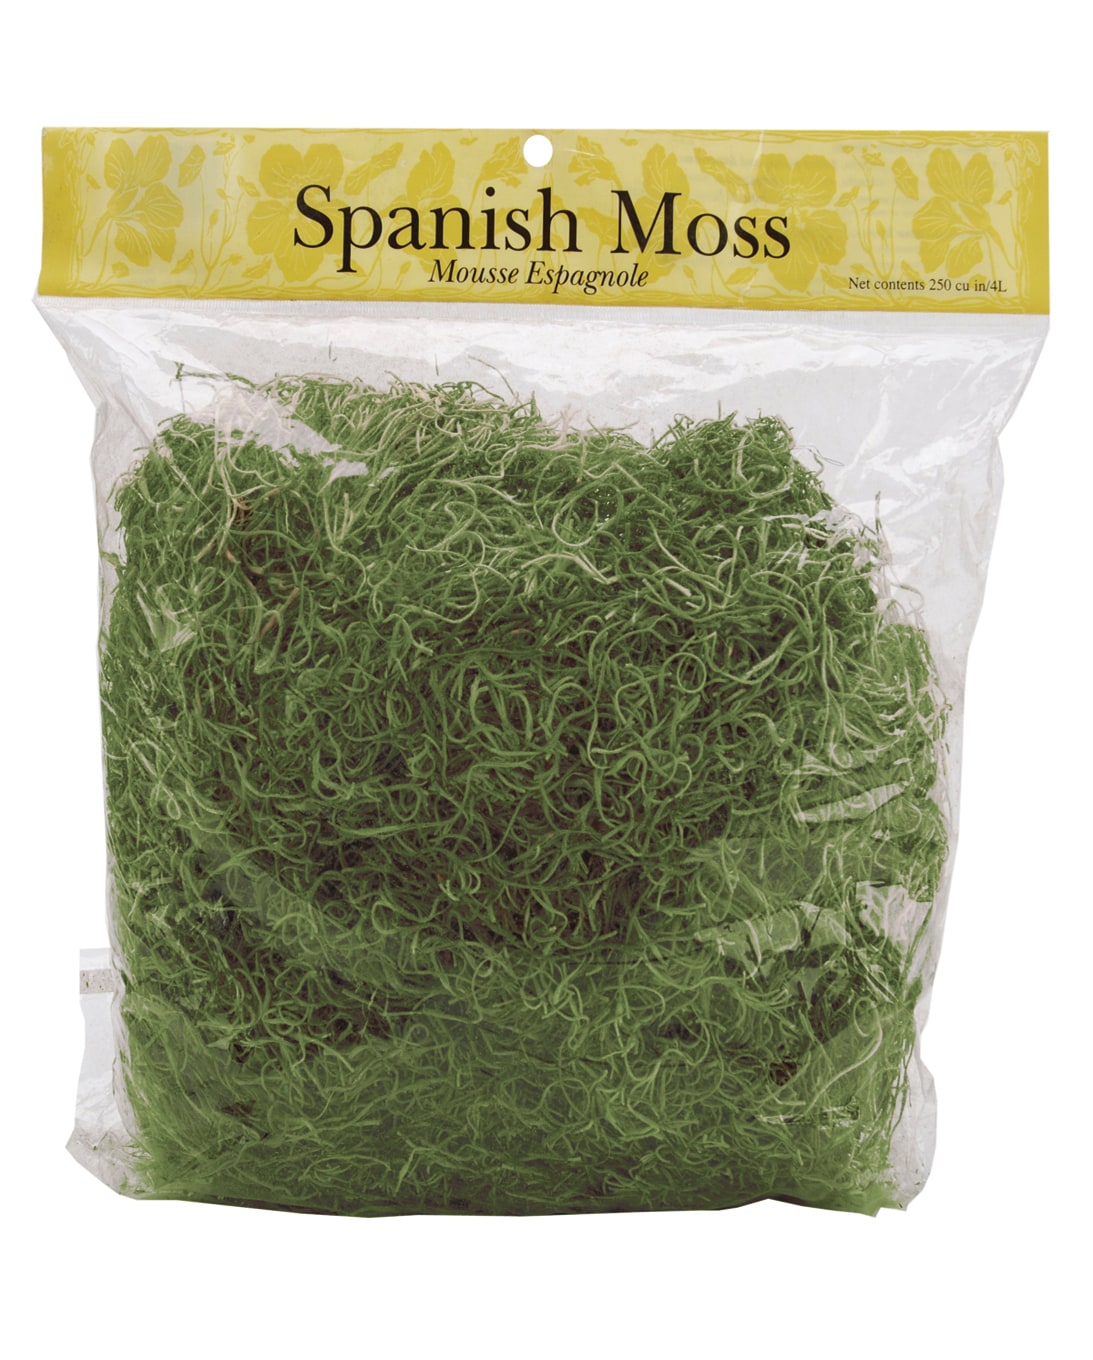 Spanish Moss 250 Cu ft